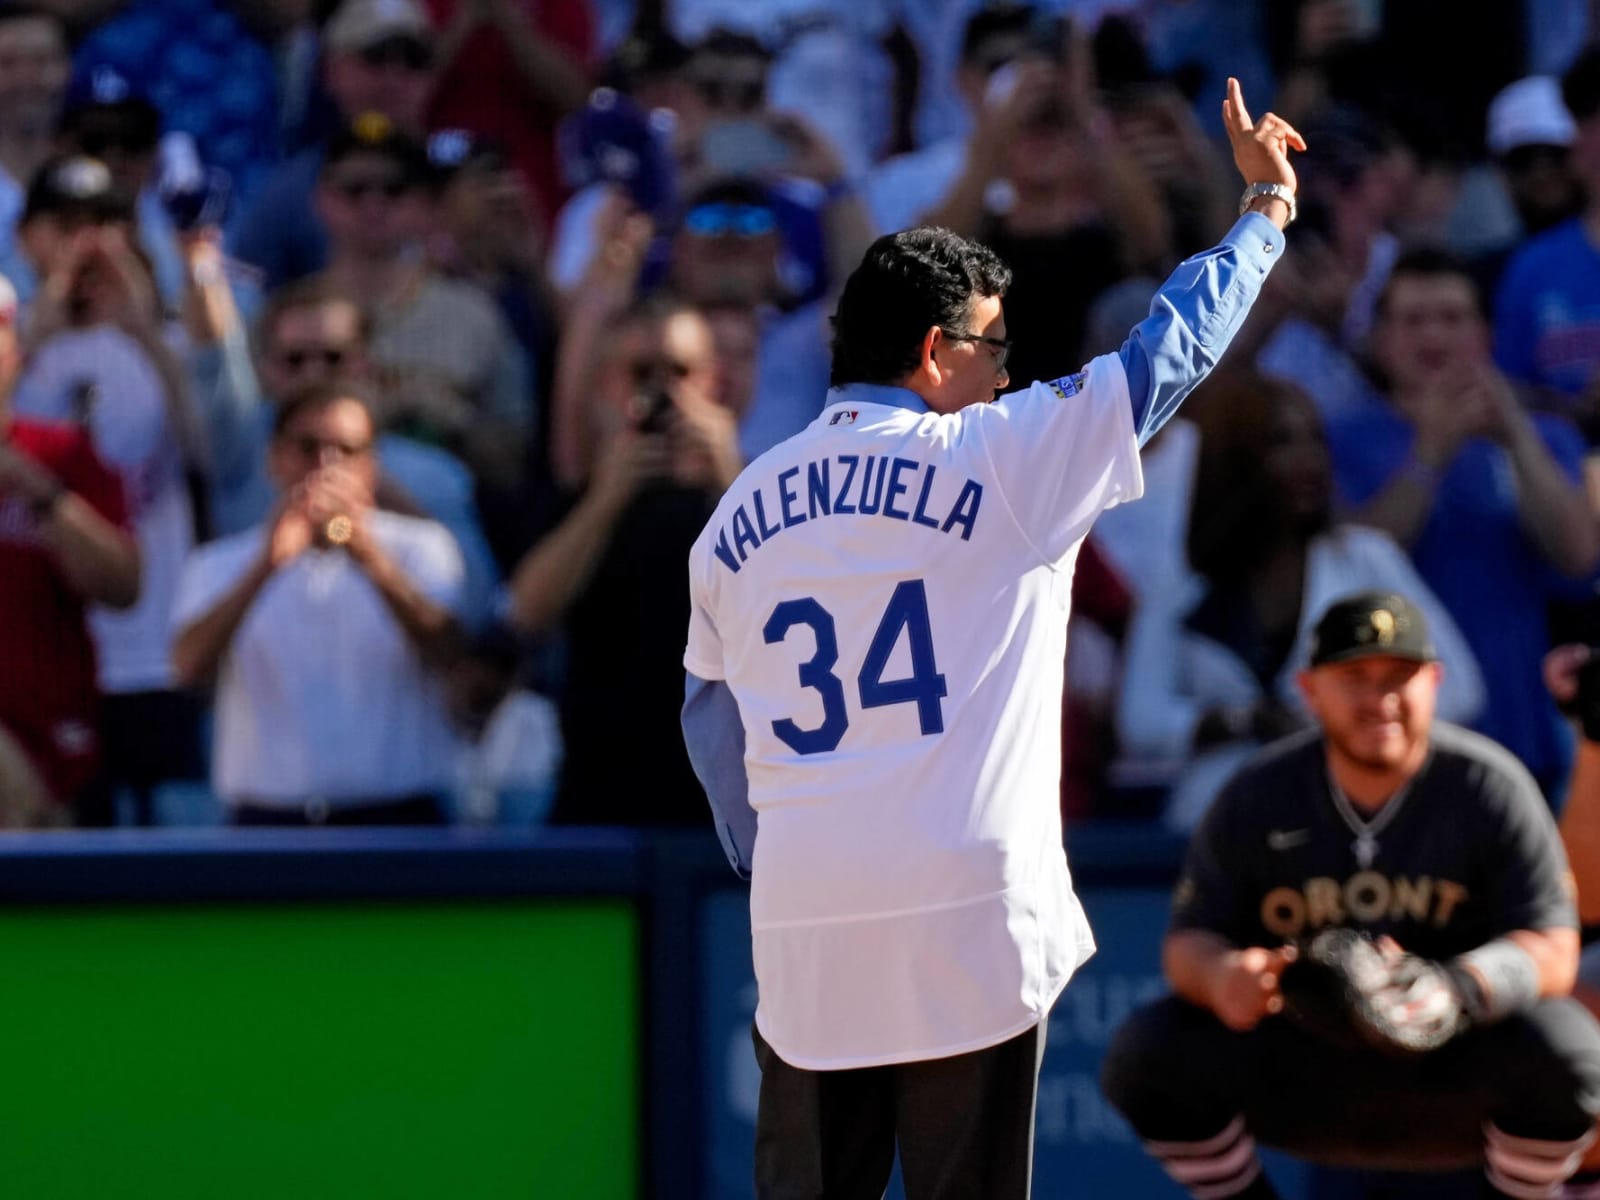 Dodgers kick off celebration of Fernando Valenzuela with jersey